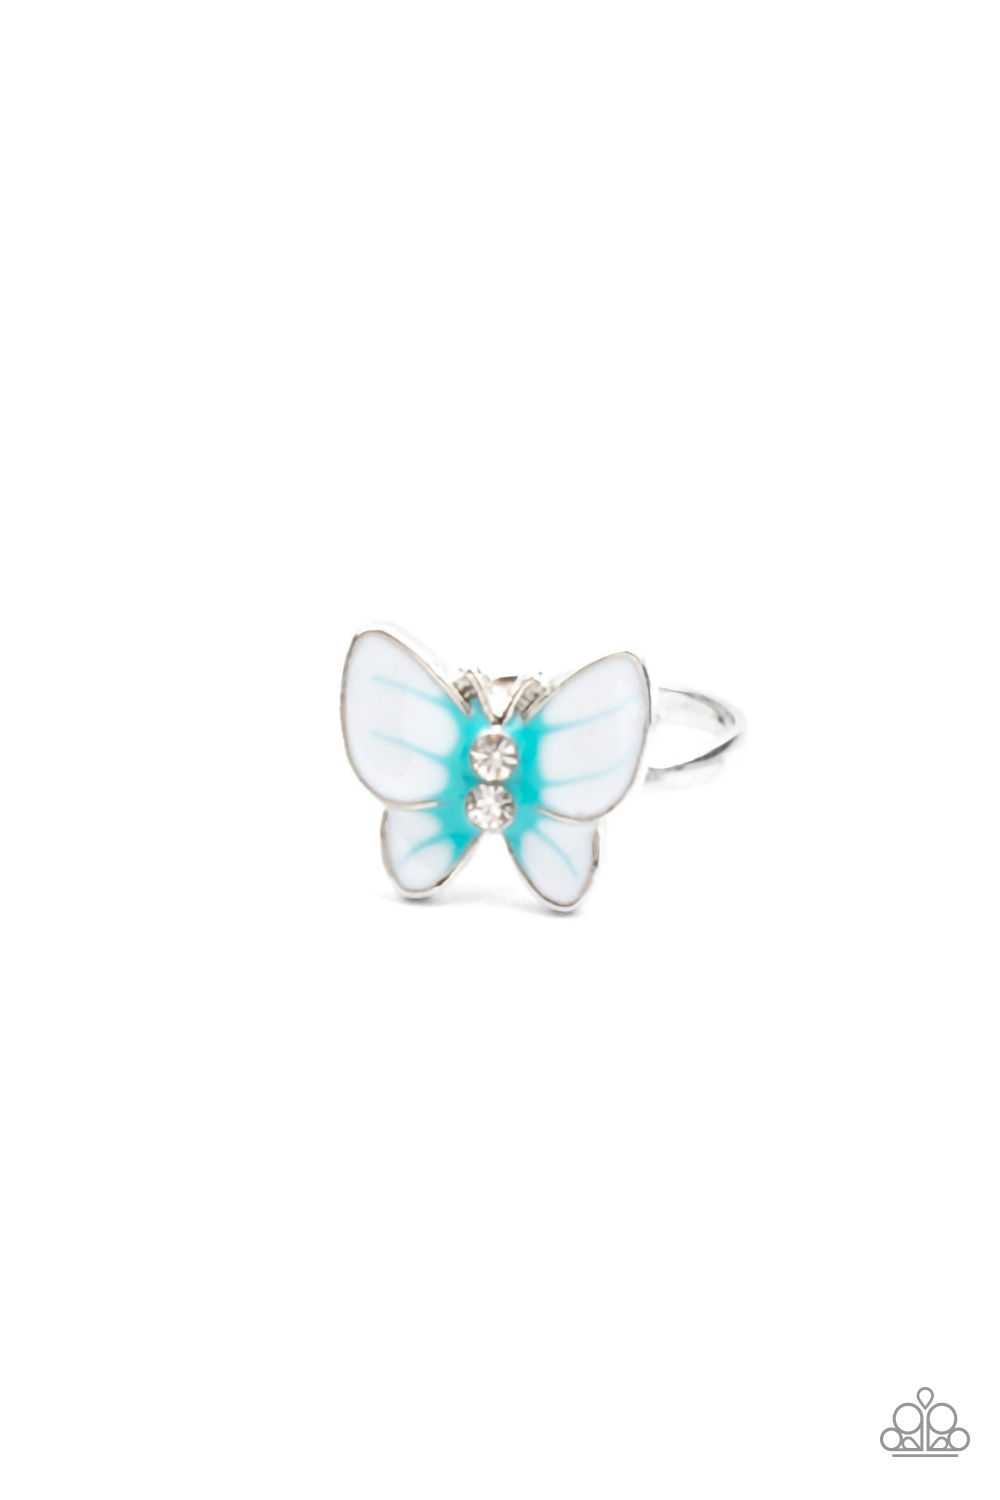 Ring - Starlet Shimmer 2 Rhinestone Butterfly - Blue